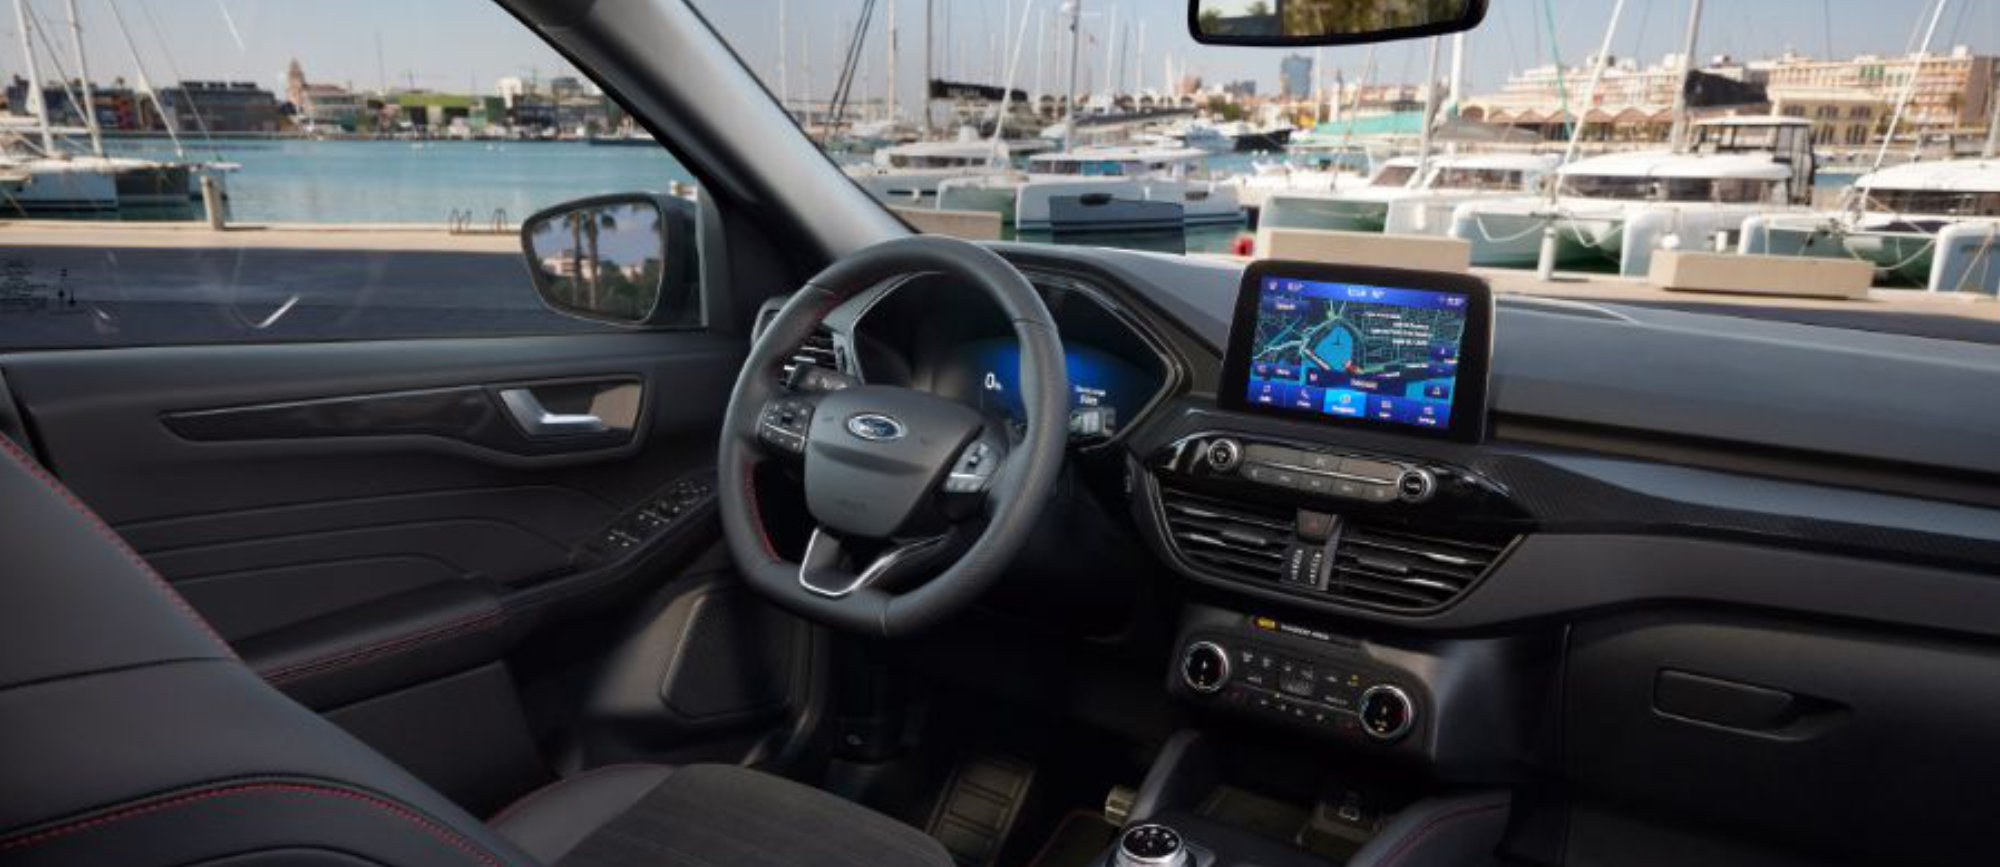 Ford Kuga Graphite Tech Edition interior